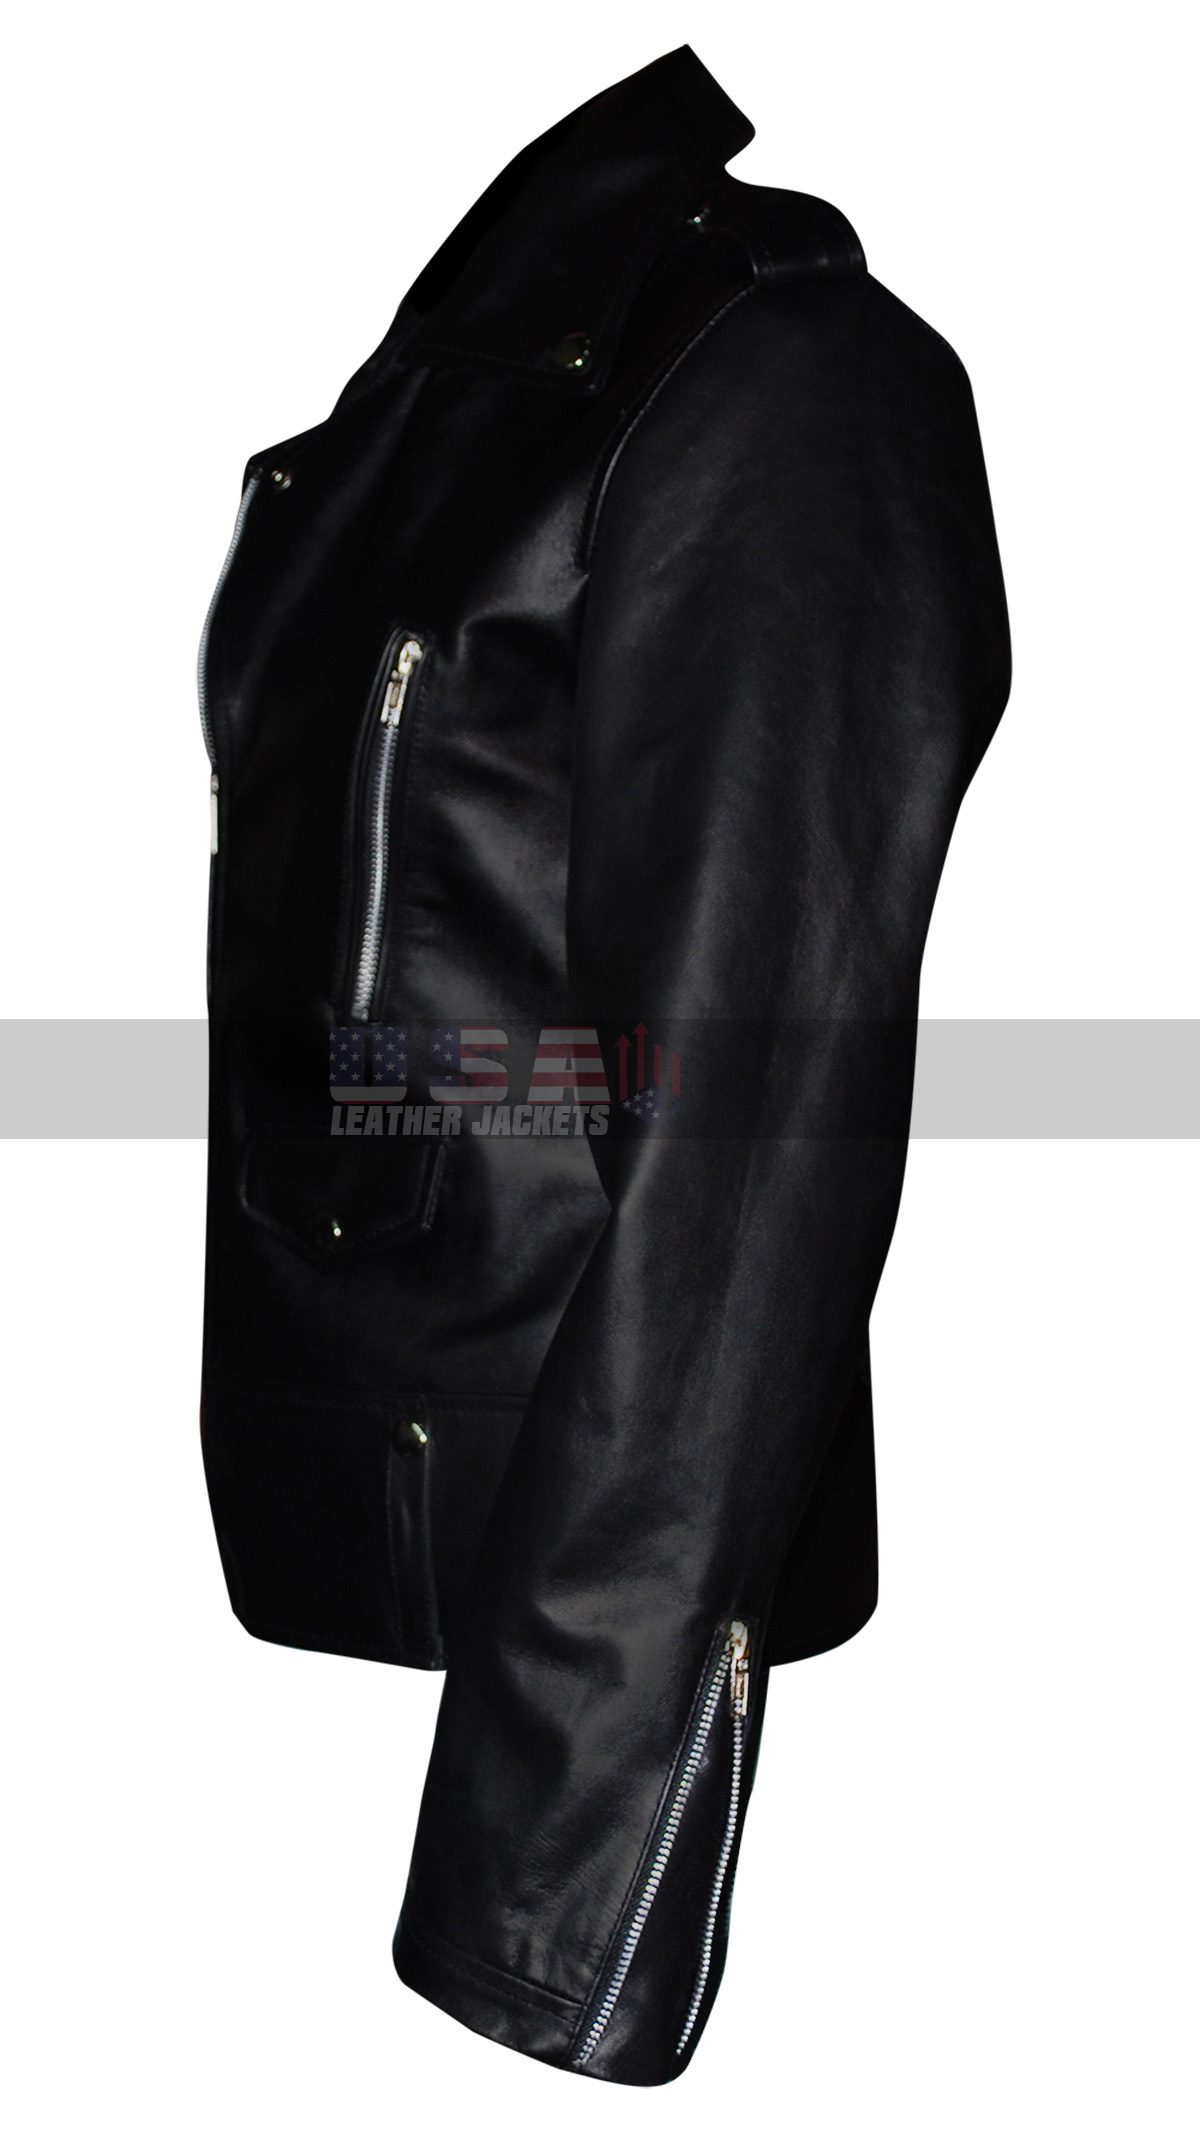 Mariah Carey Black Motorcycle Leather Jacket